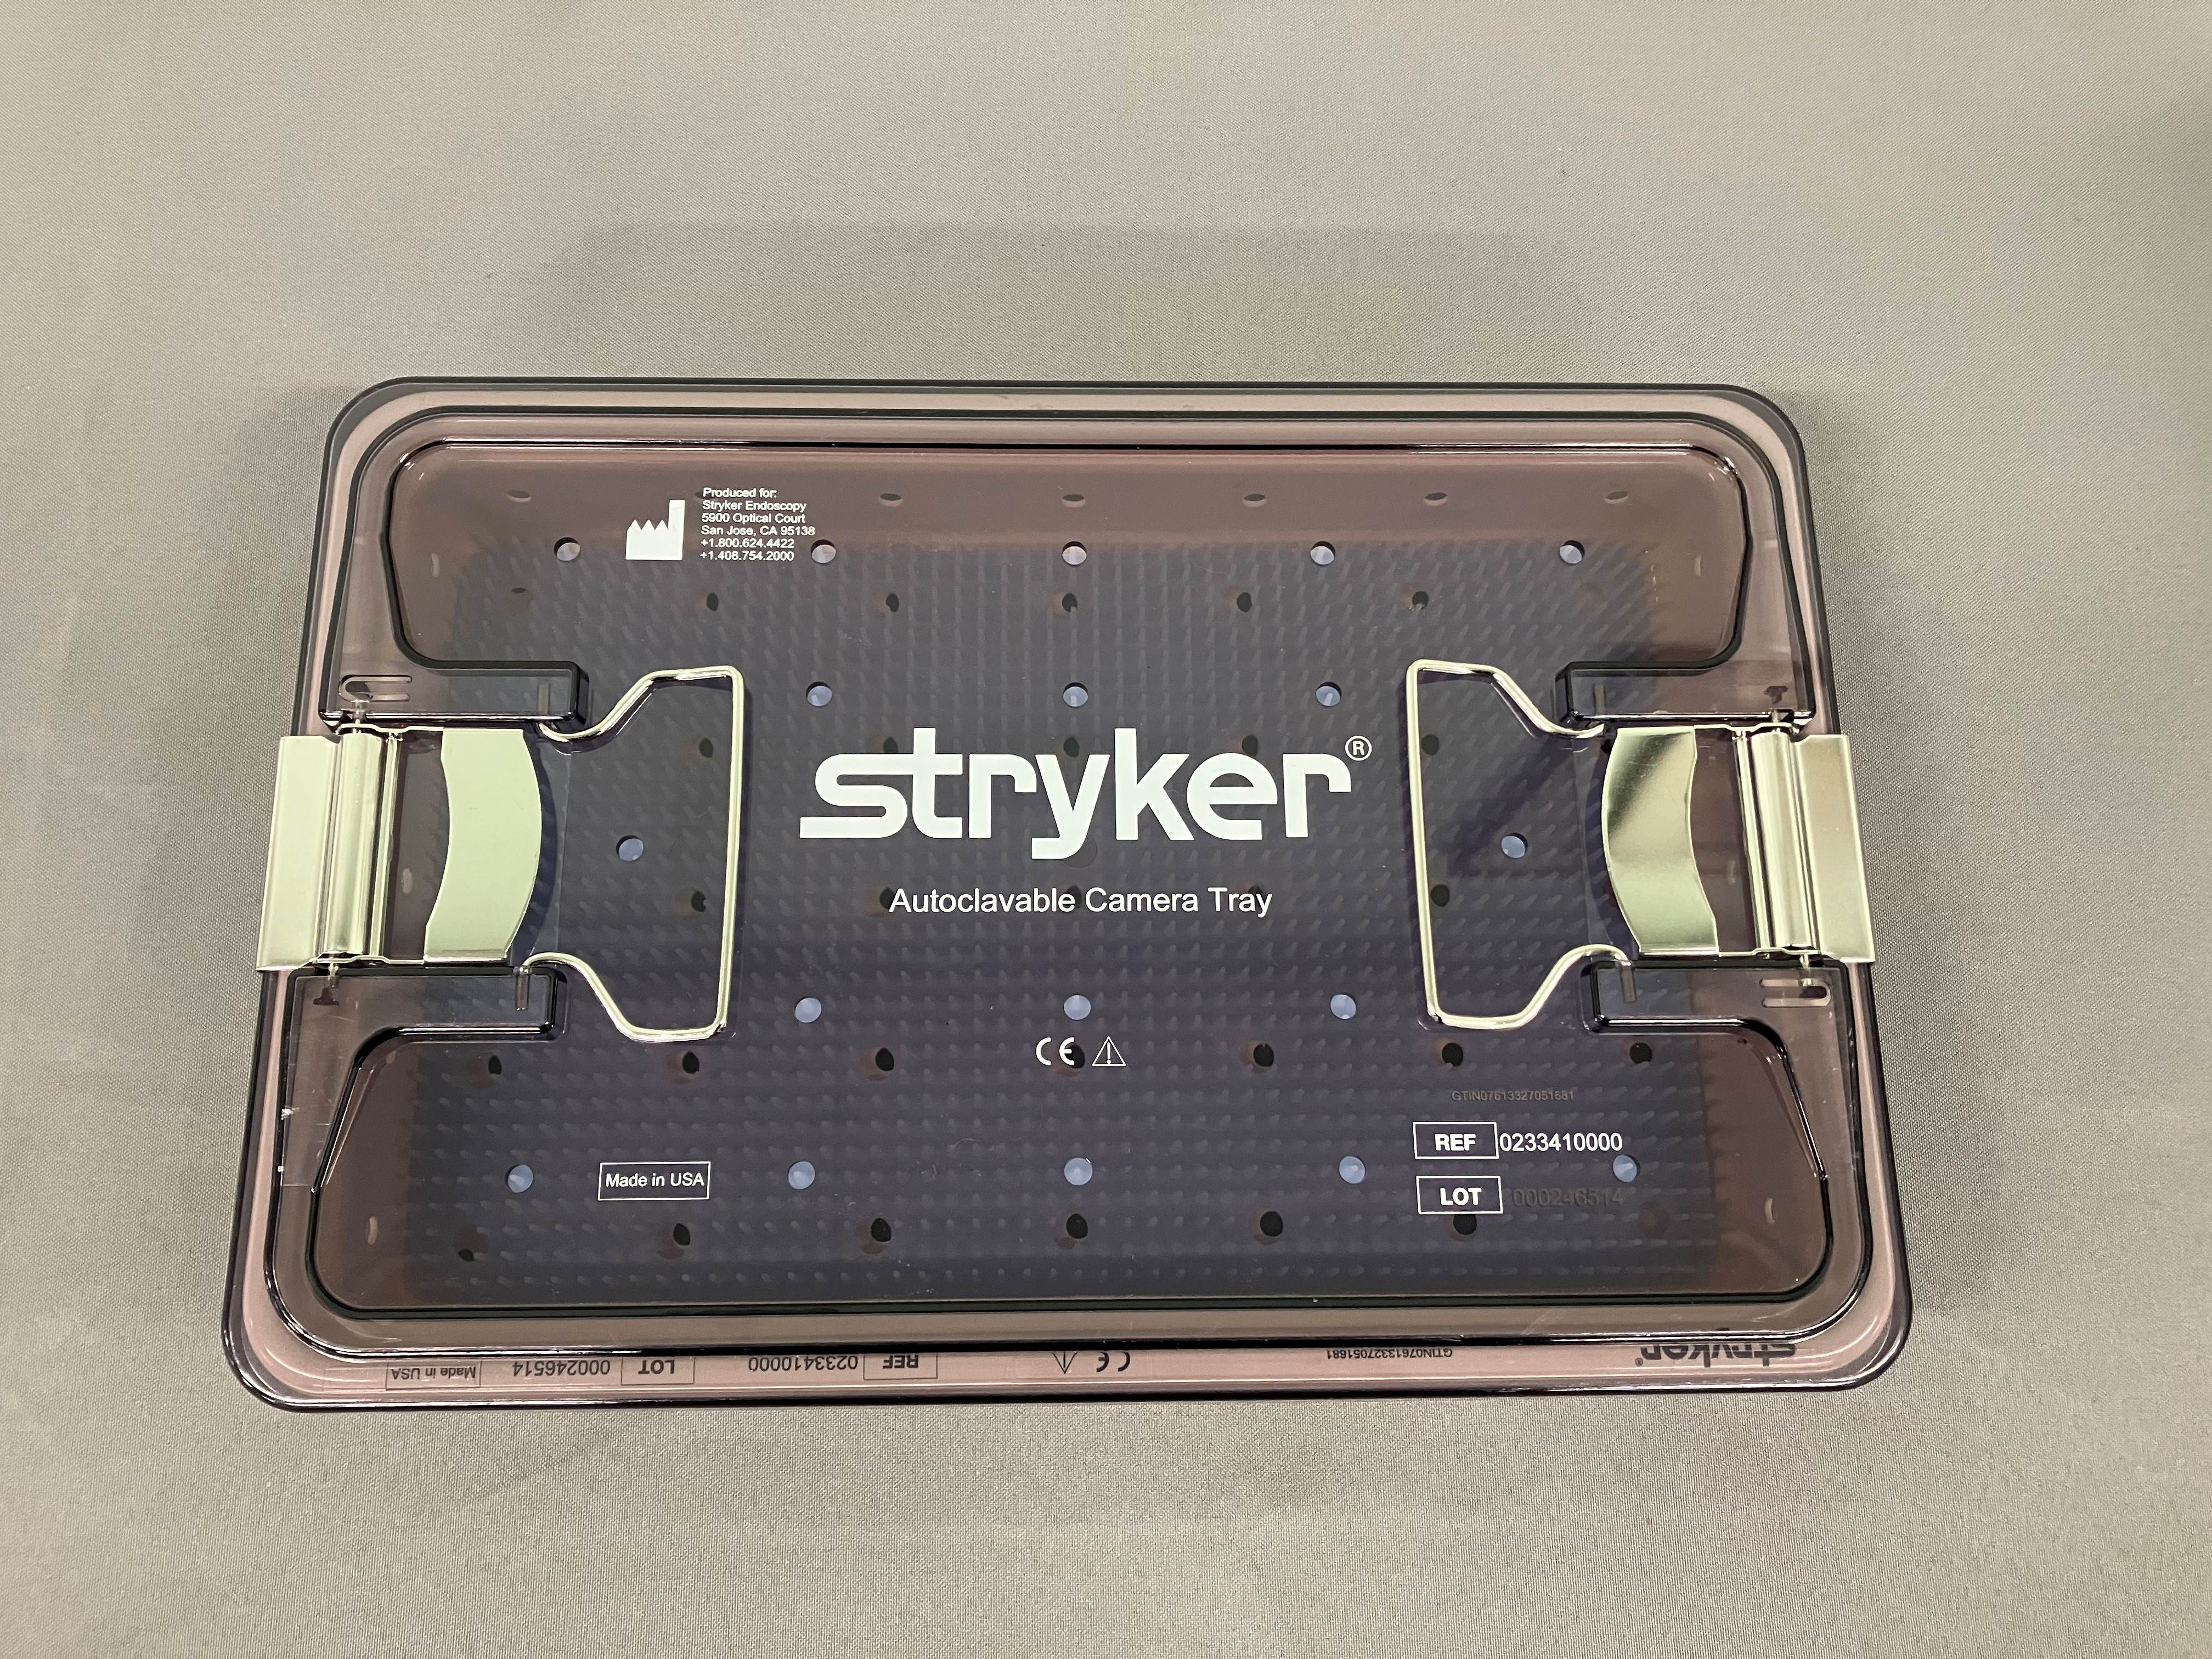 Stryker Autoclavable Camera Tray – no instruments